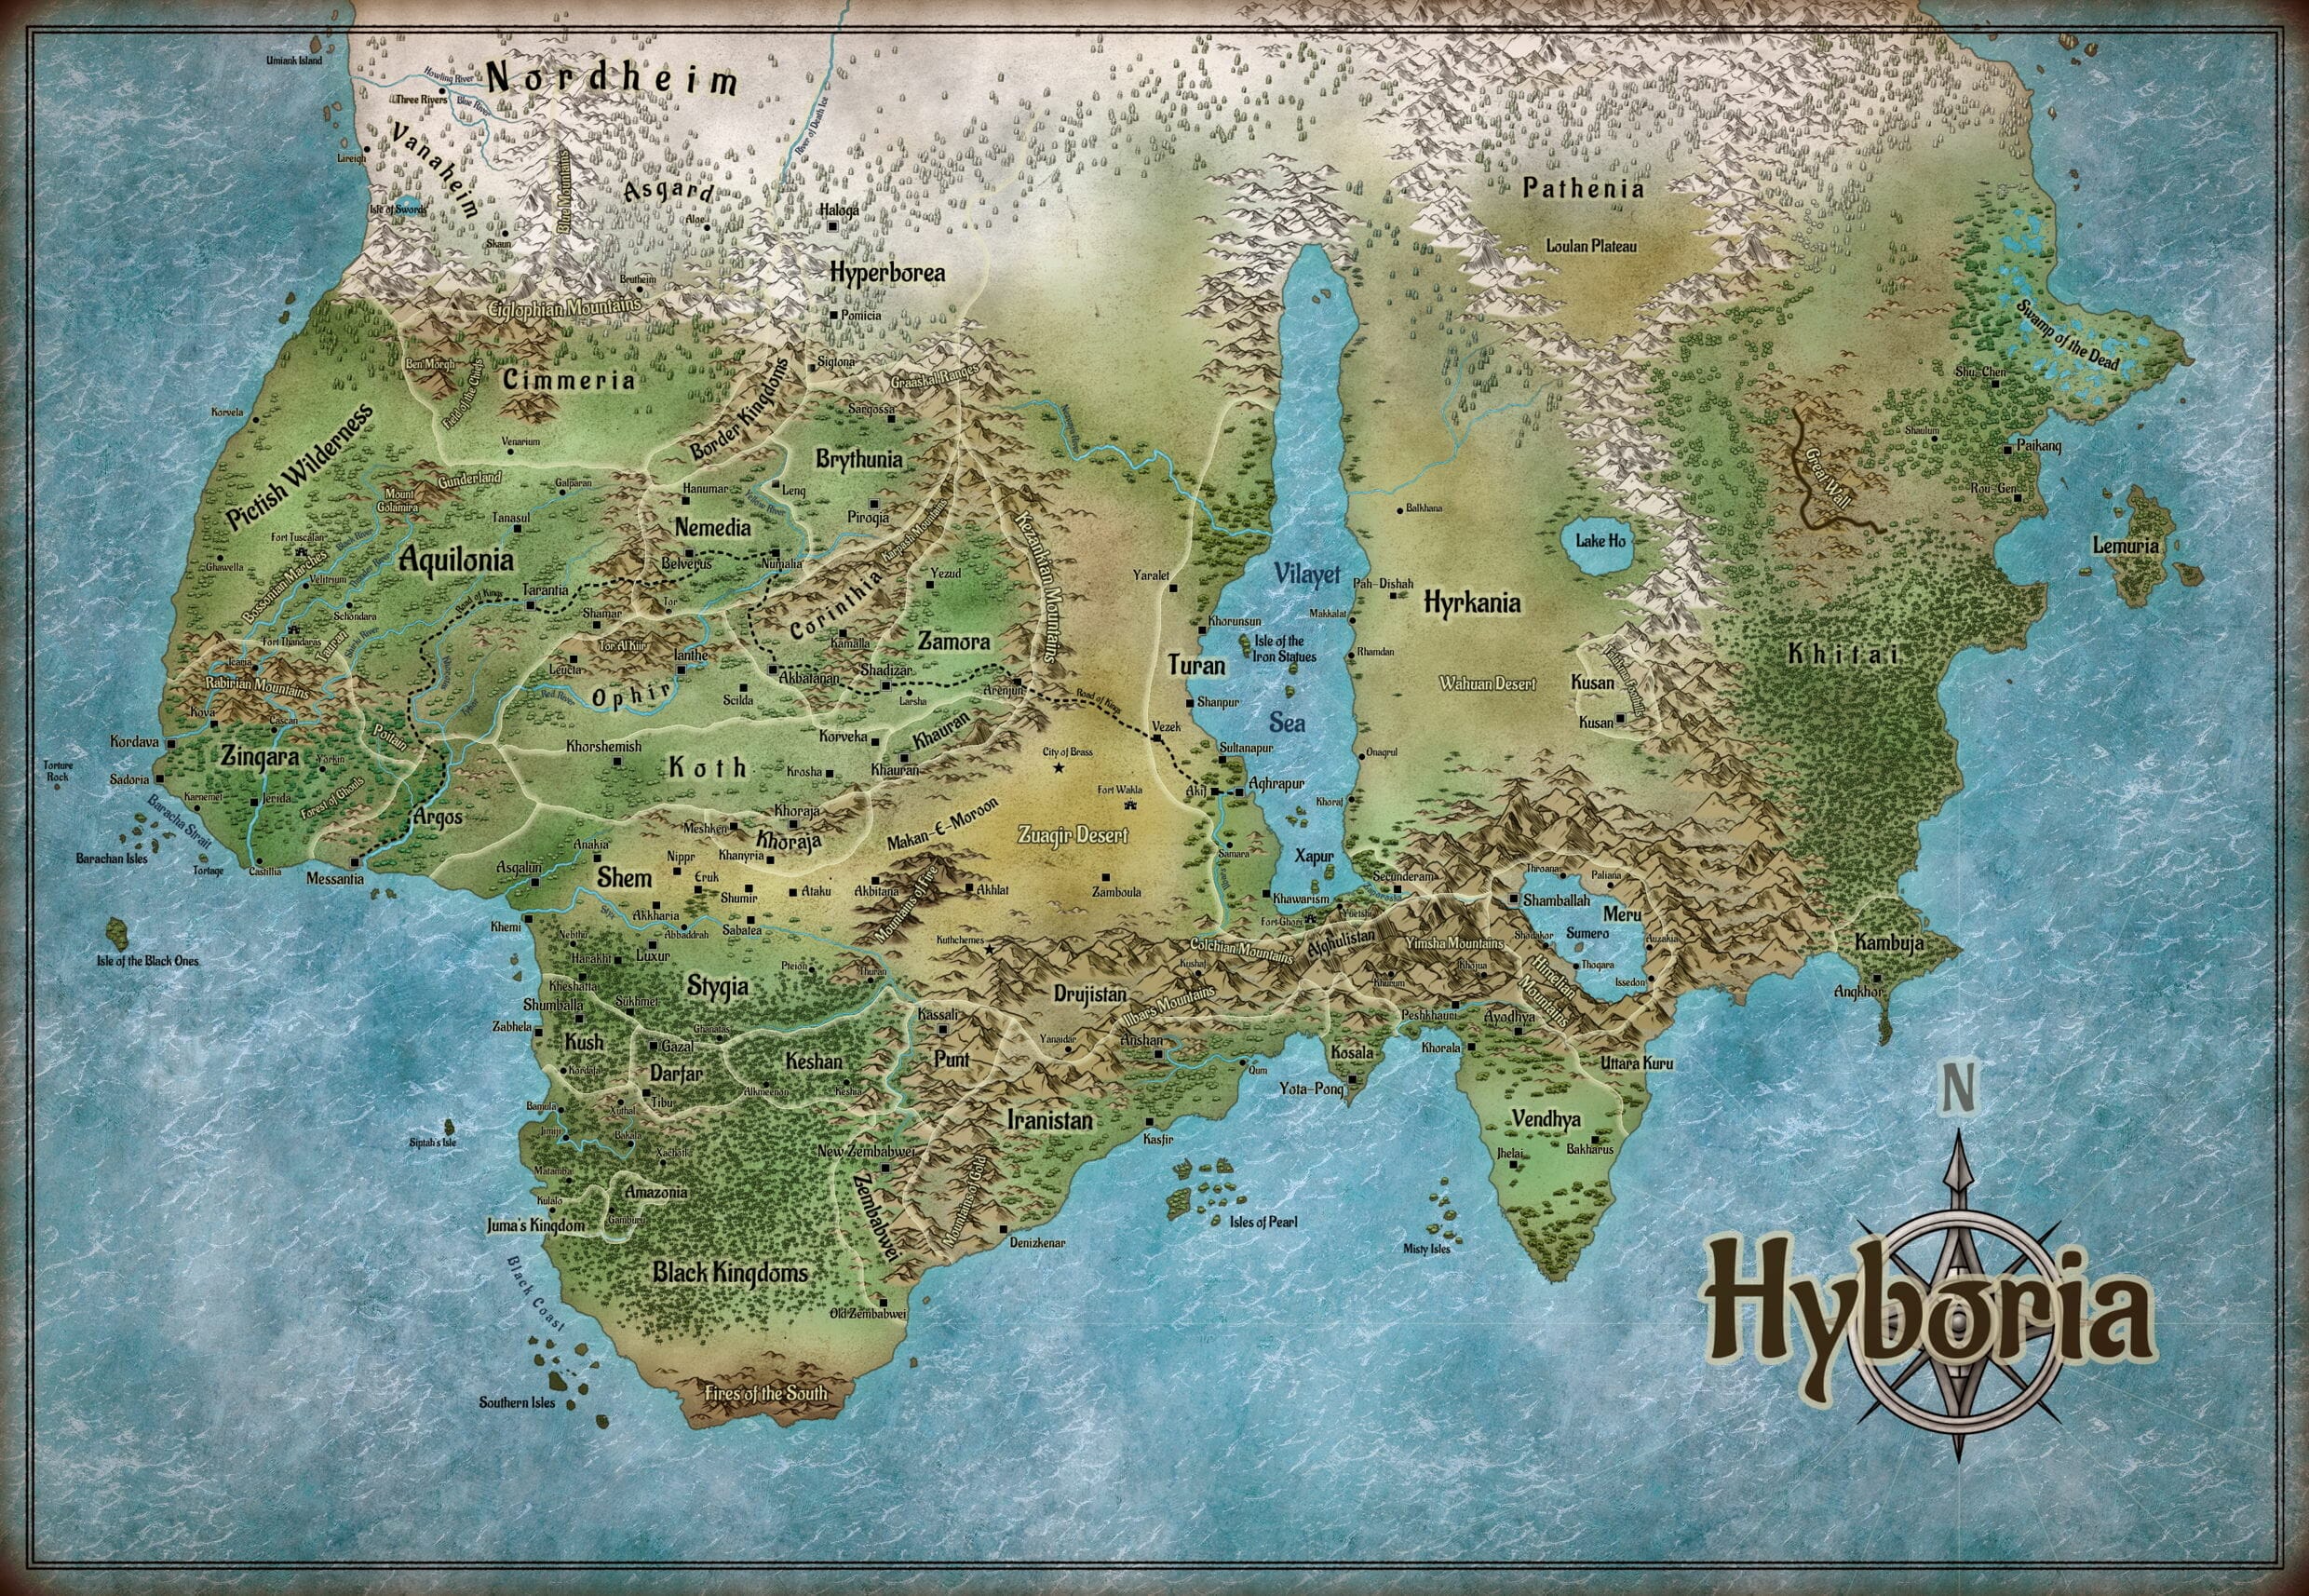 Hyborian-Age-of-Conan-the-Barbarian-map.jpg